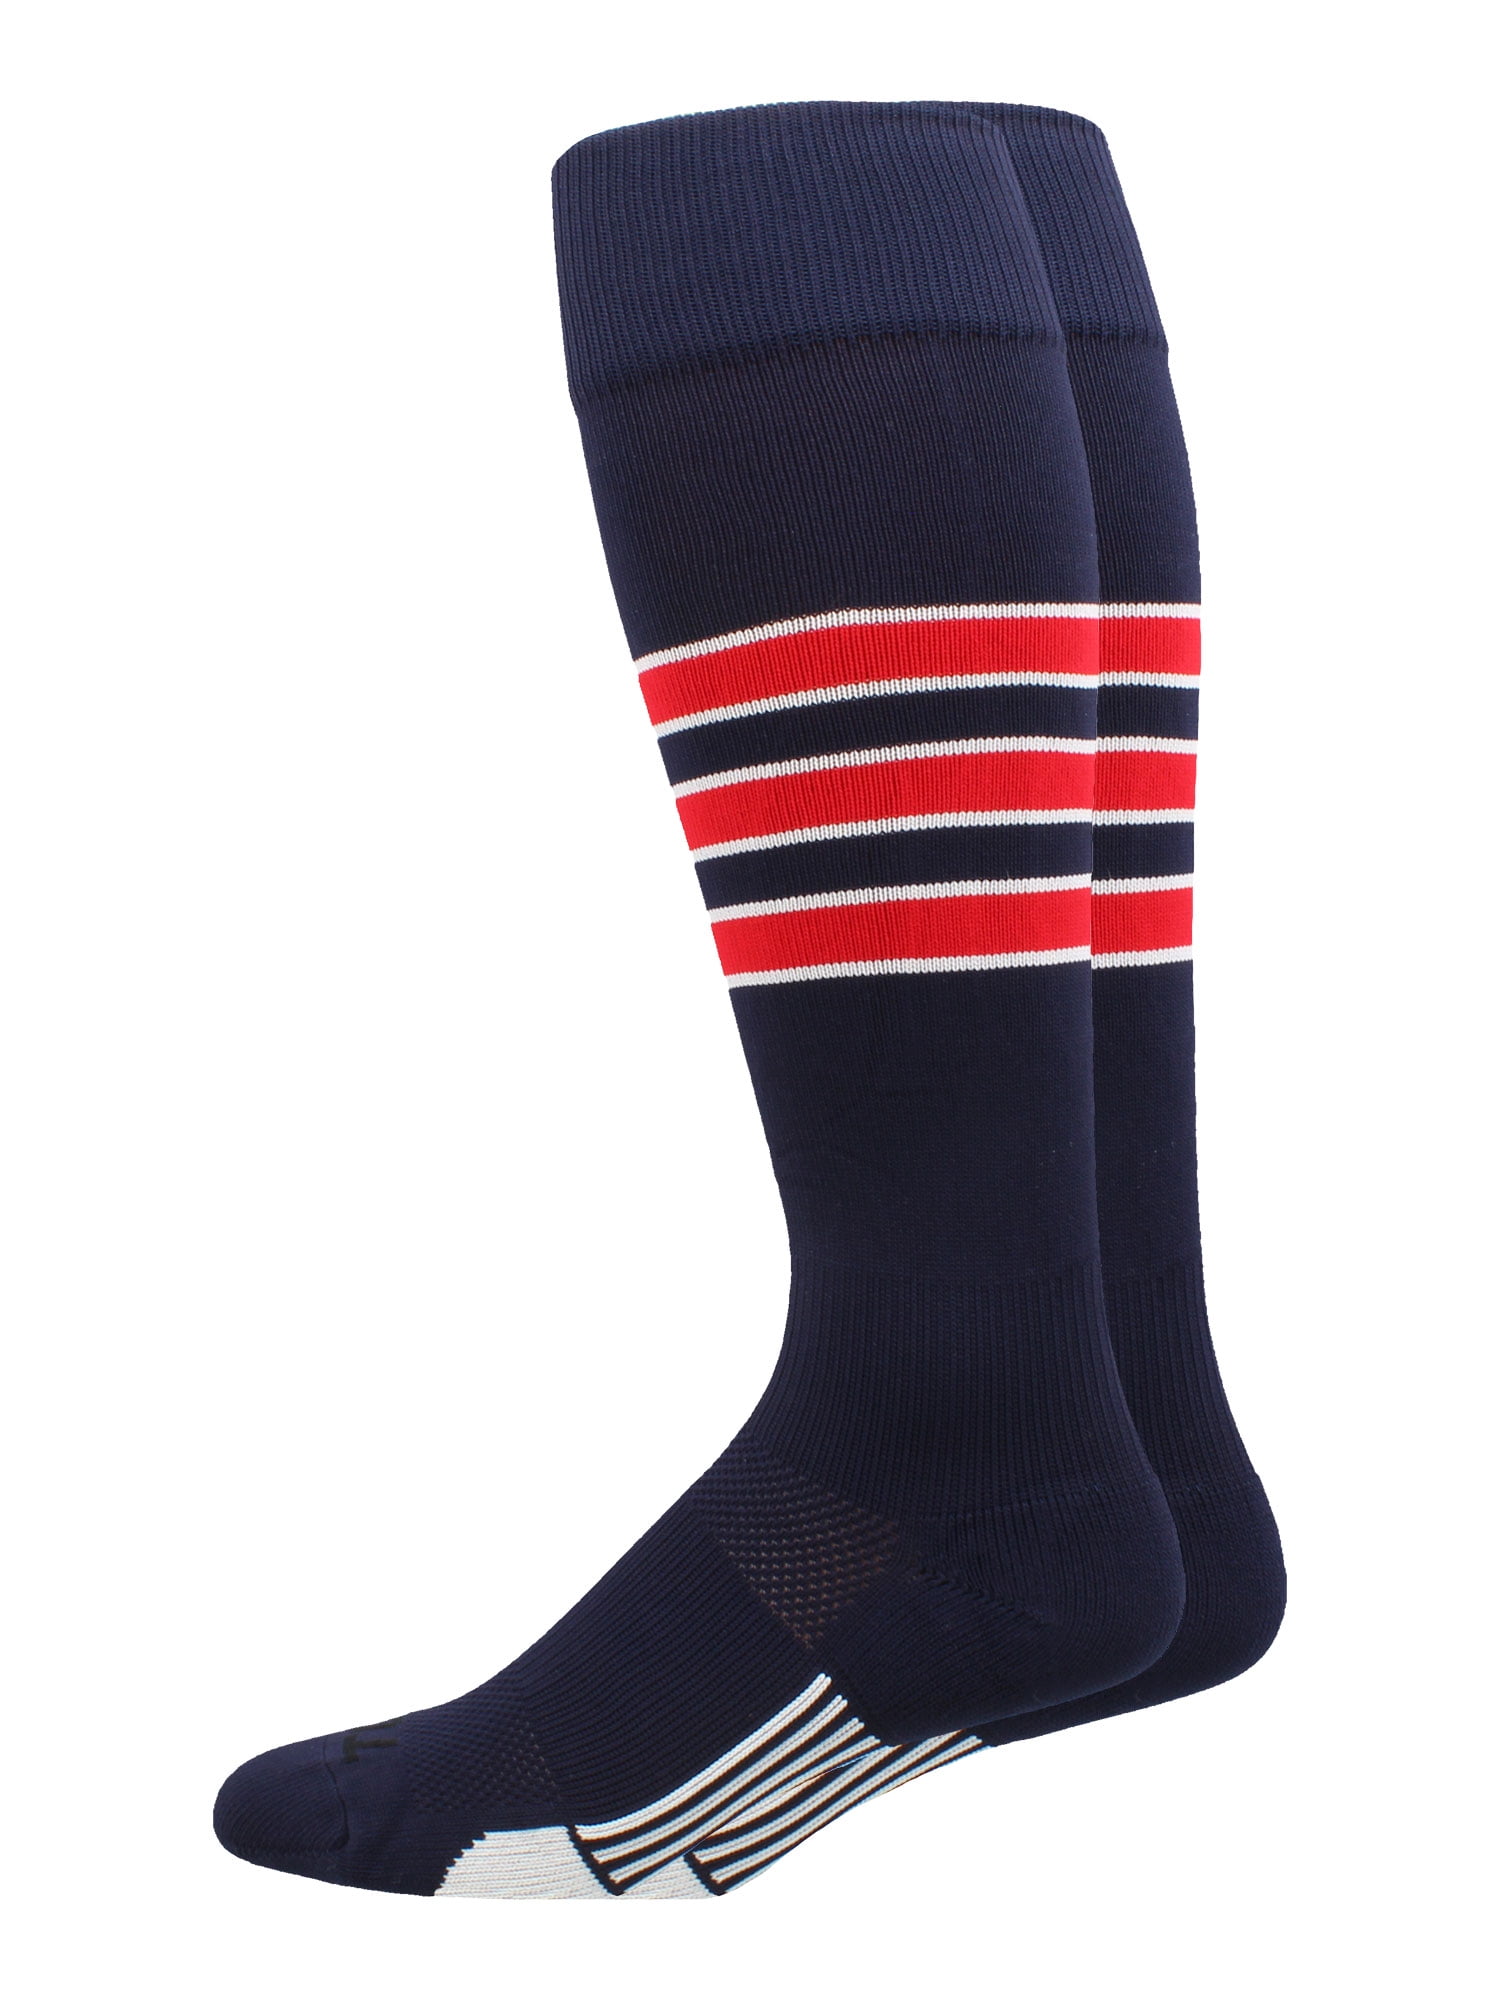 Dugout 3 Stripe Baseball Socks (Navy/Scarlet/White, Medium) - Navy ...